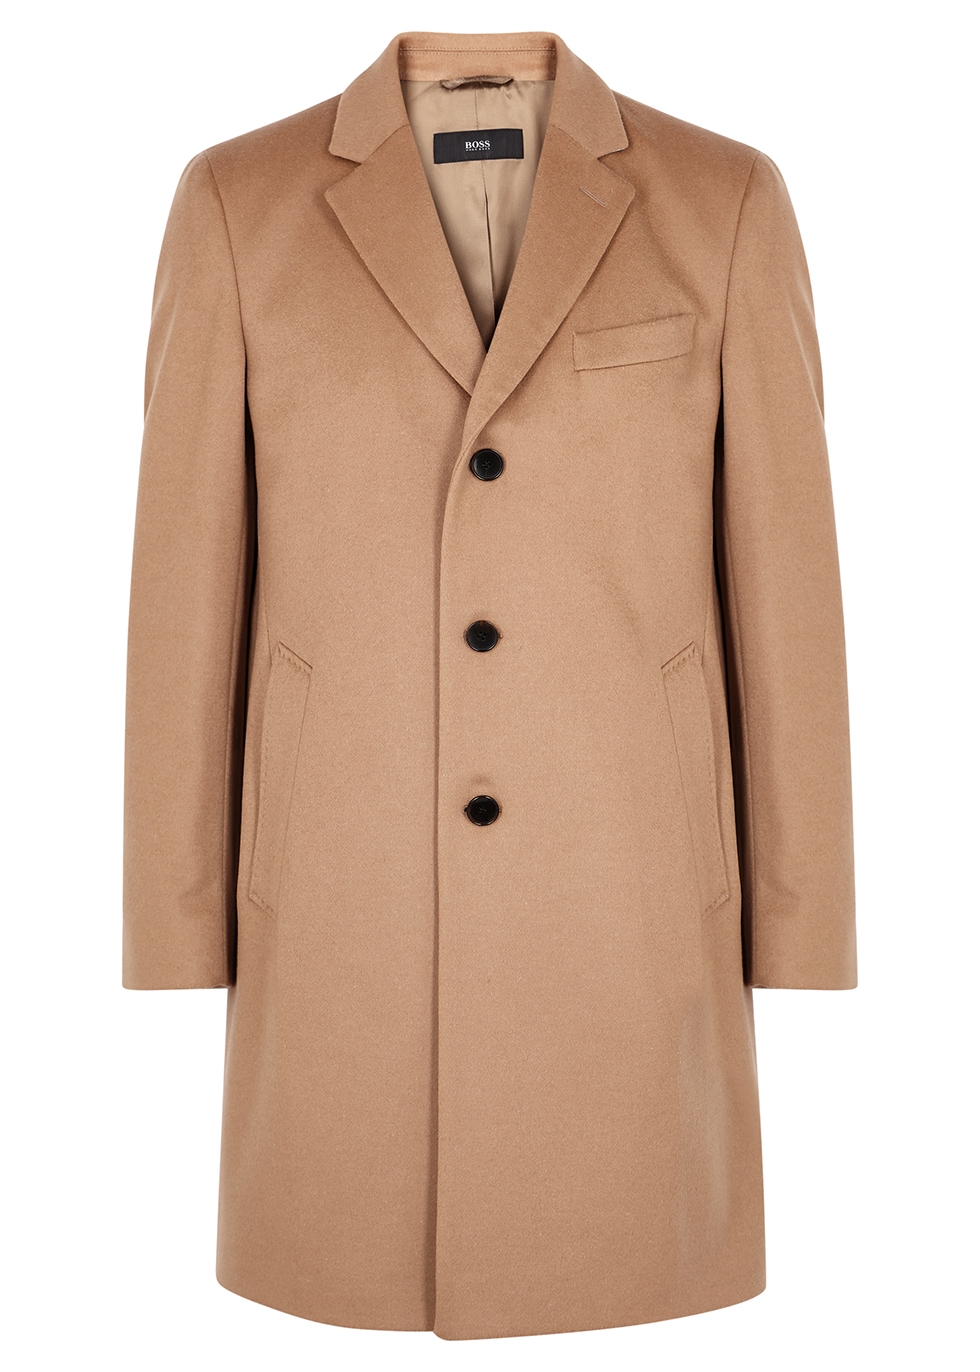 BOSS Camel wool and cashmere-blend coat - Harvey Nichols